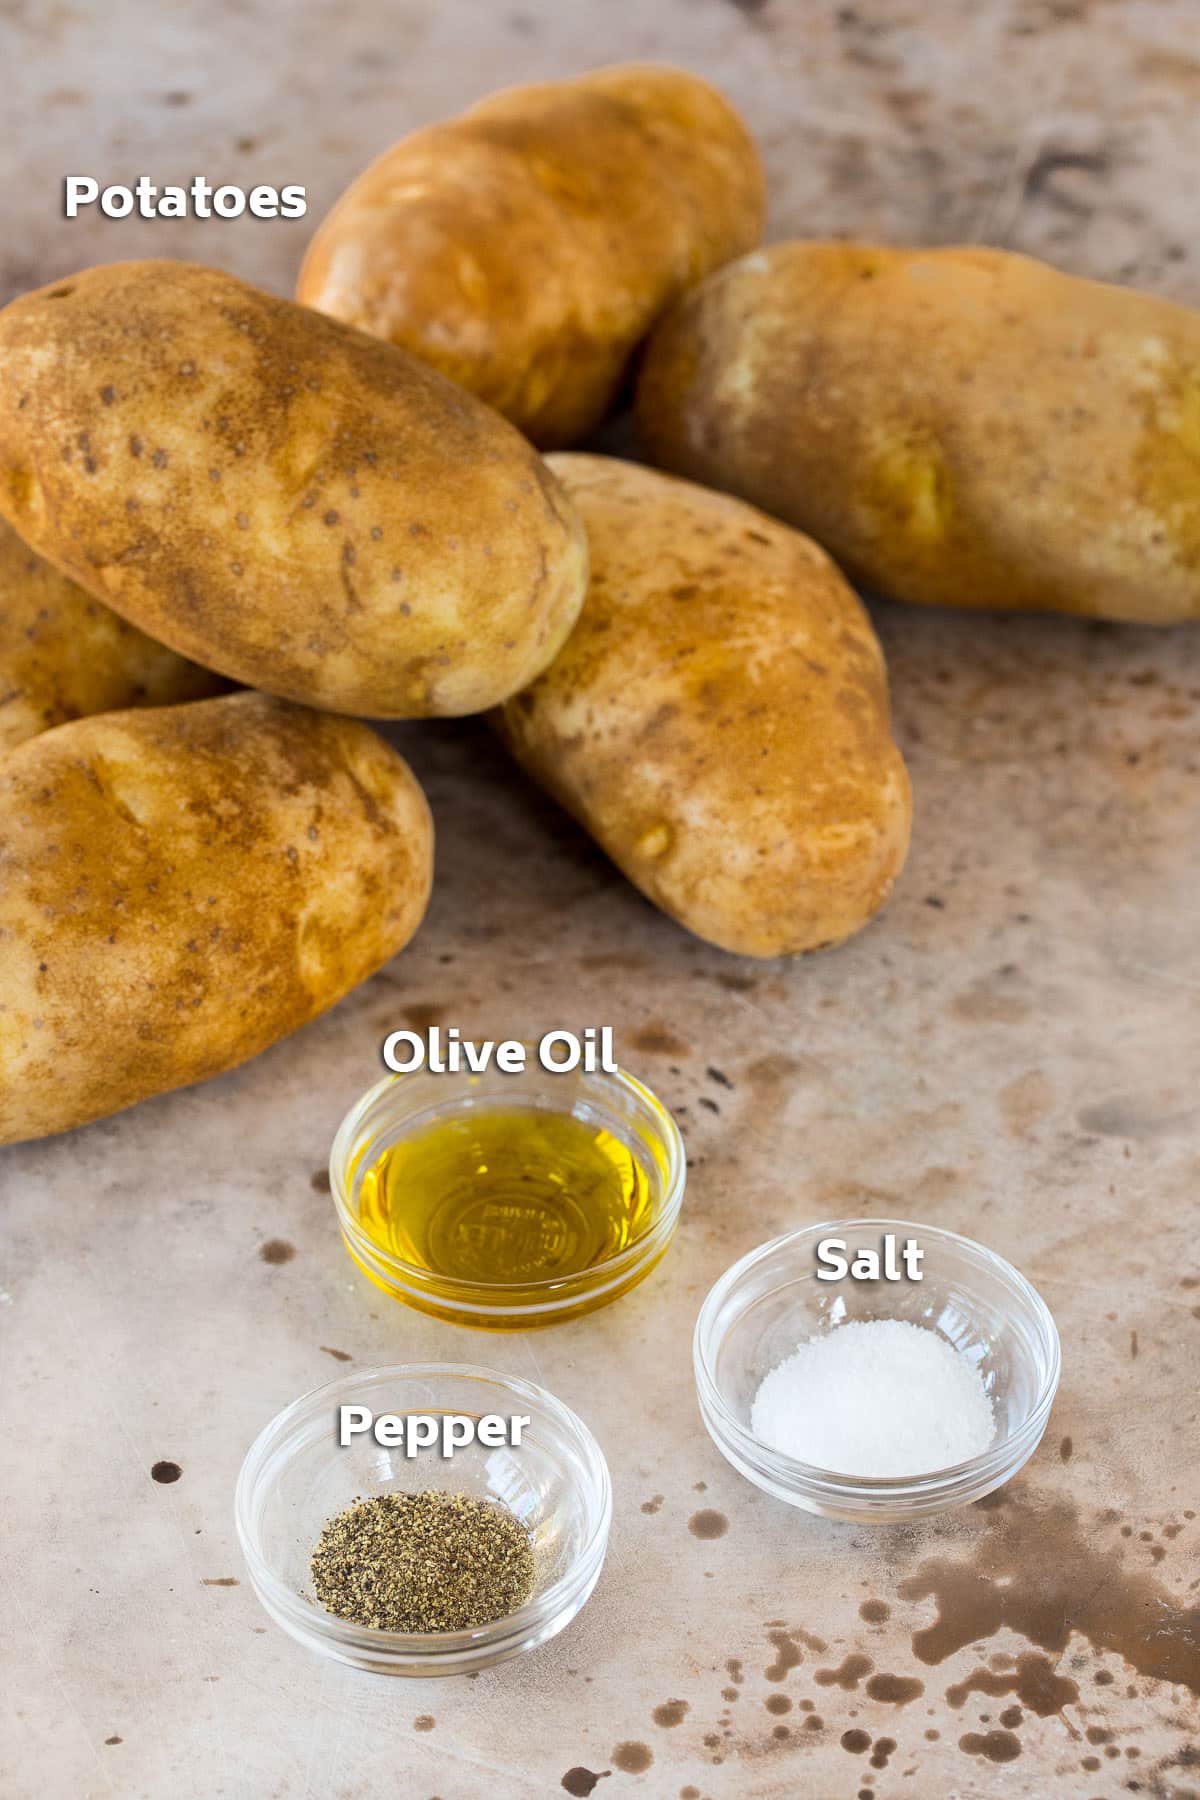 Potatoes, olive oil and seasonings.